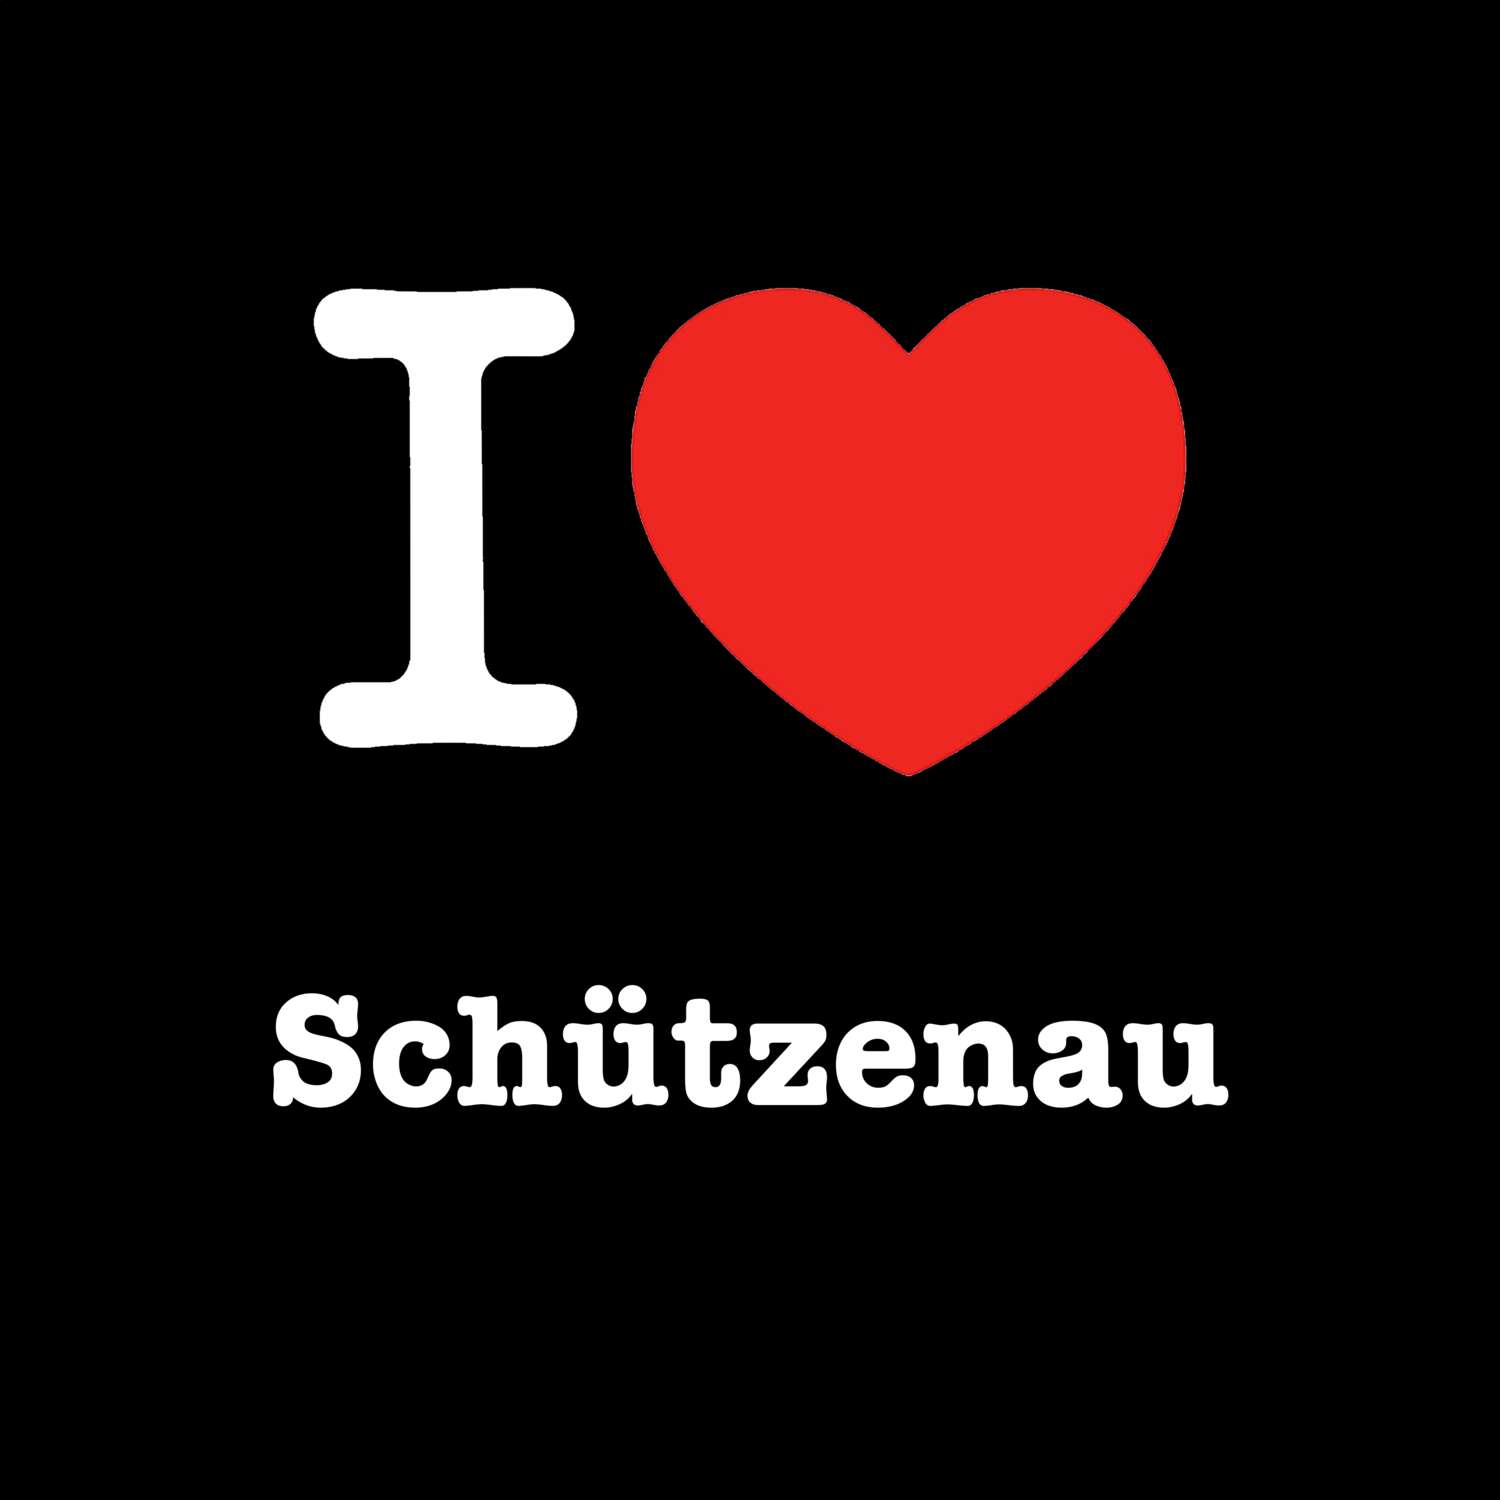 Schützenau T-Shirt »I love«